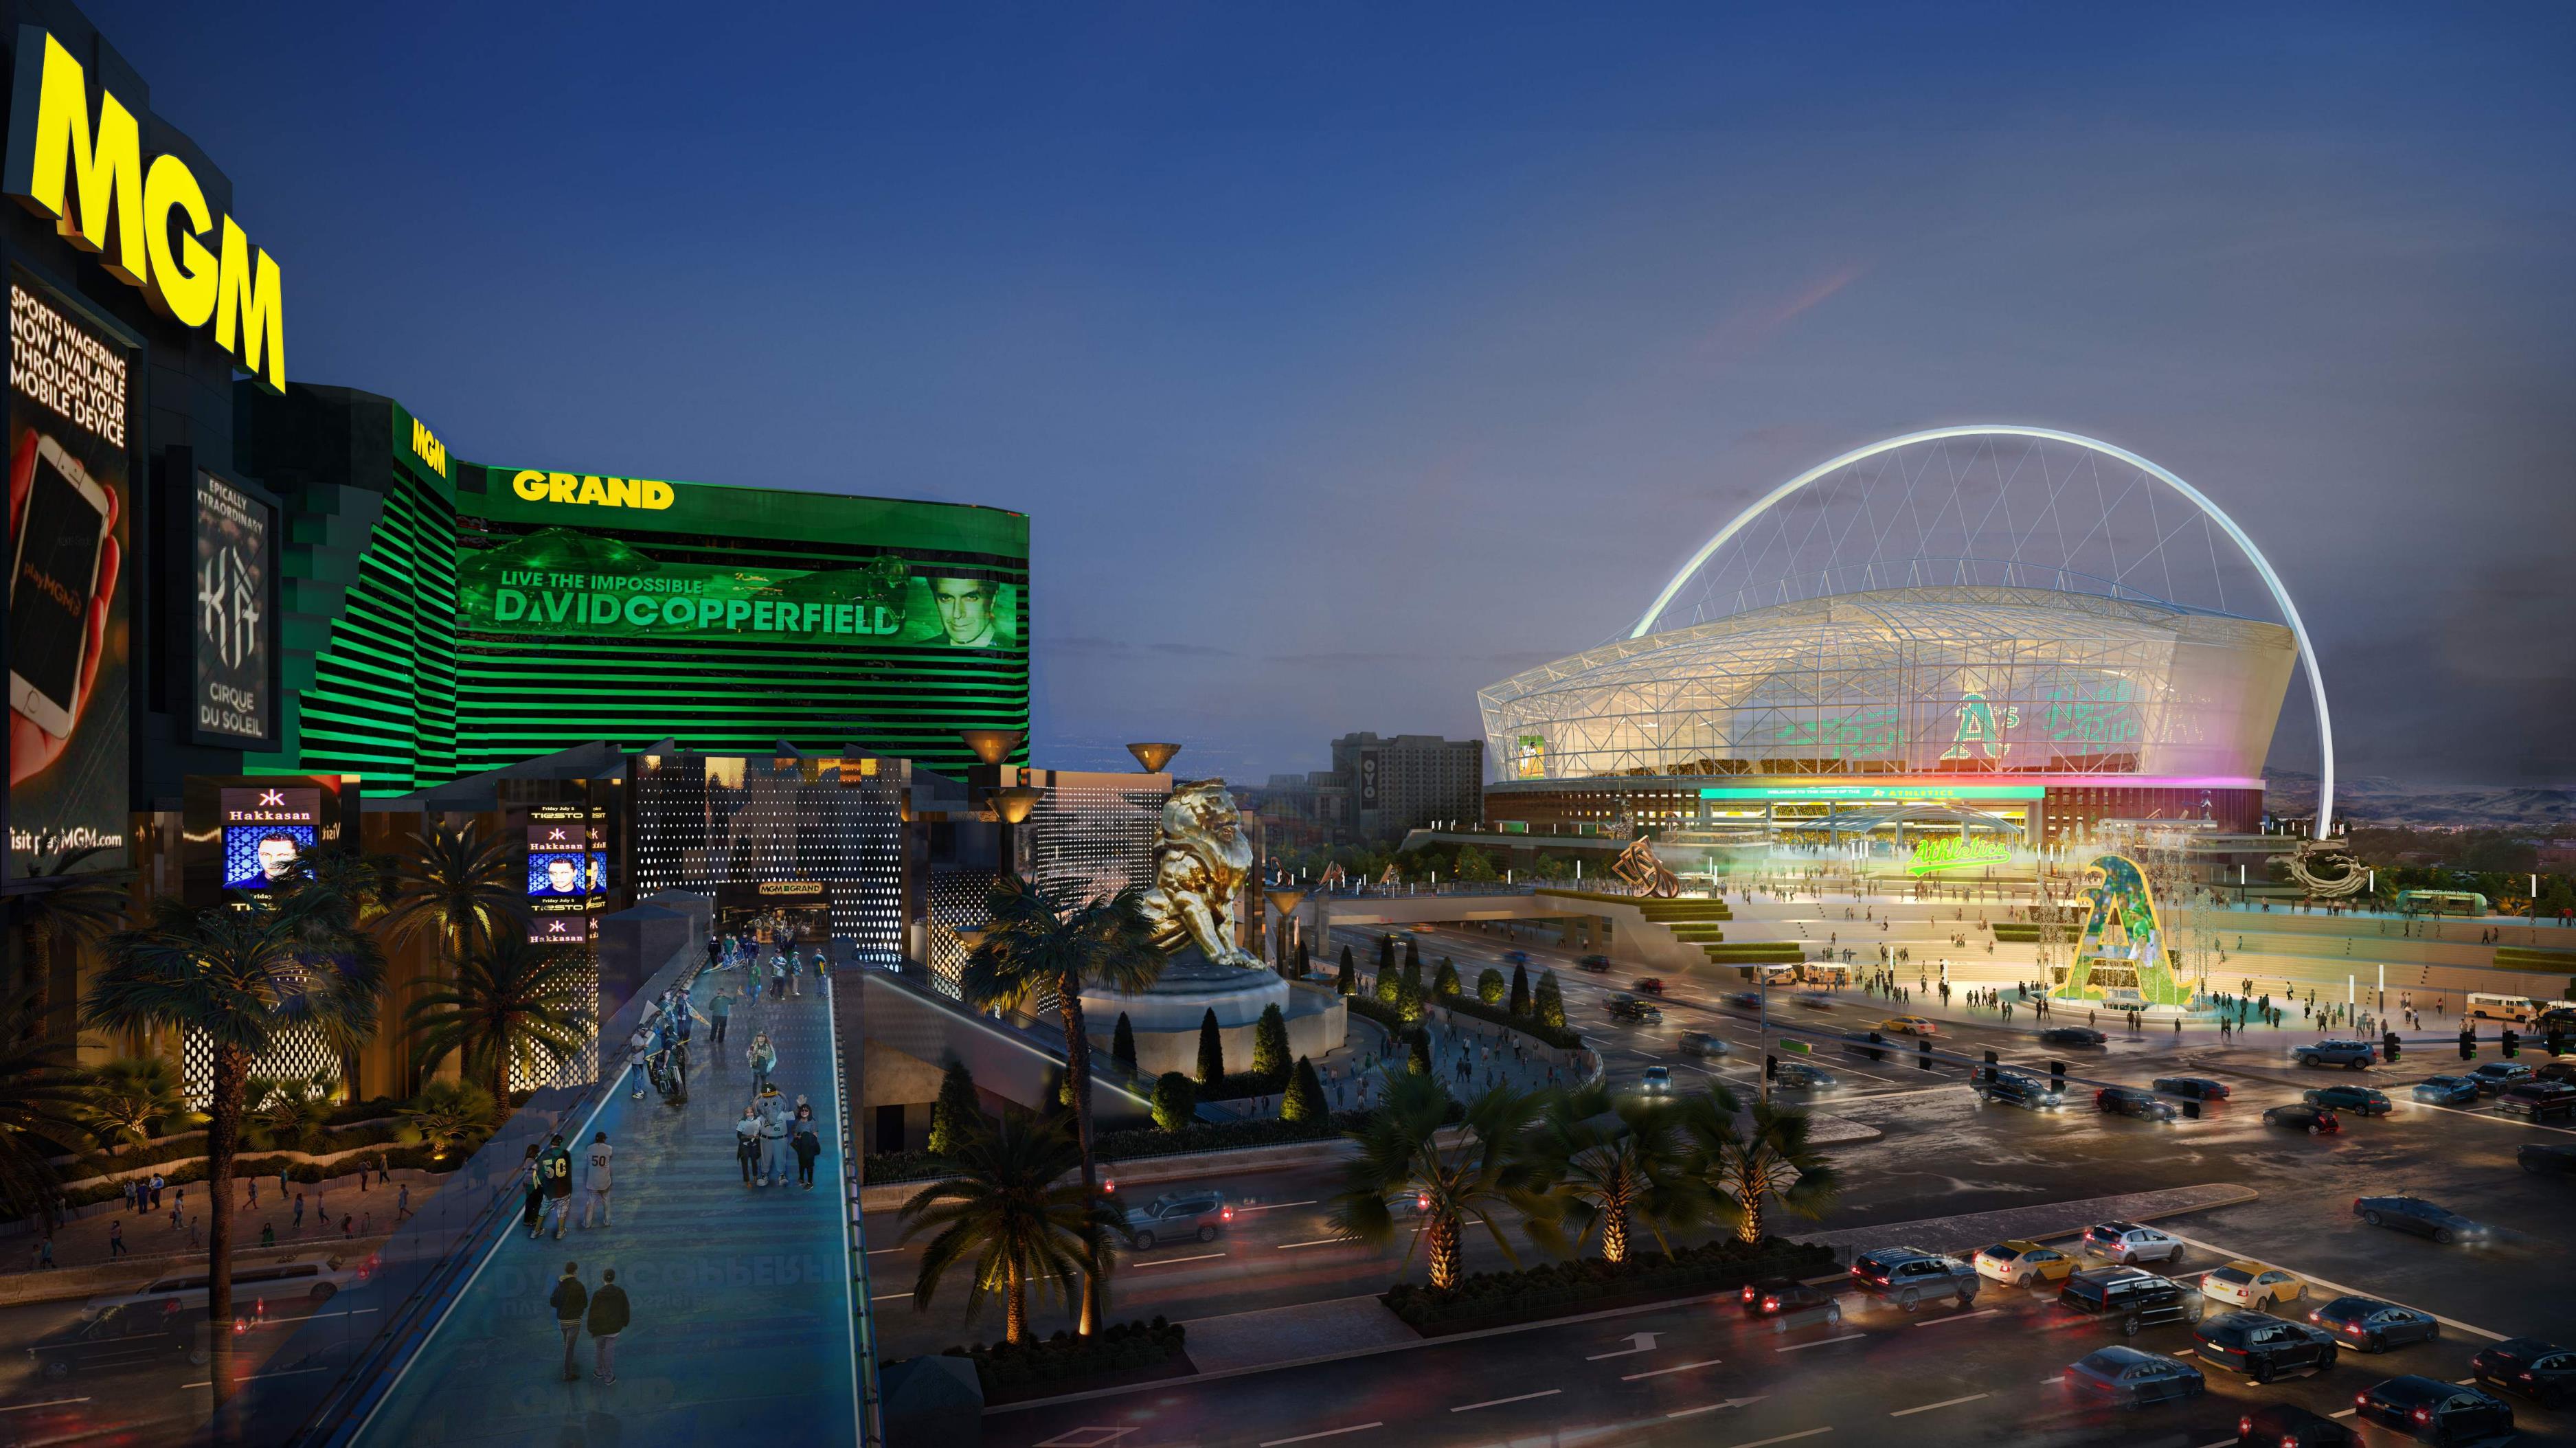 Athletics acquire land for Las Vegas ballpark